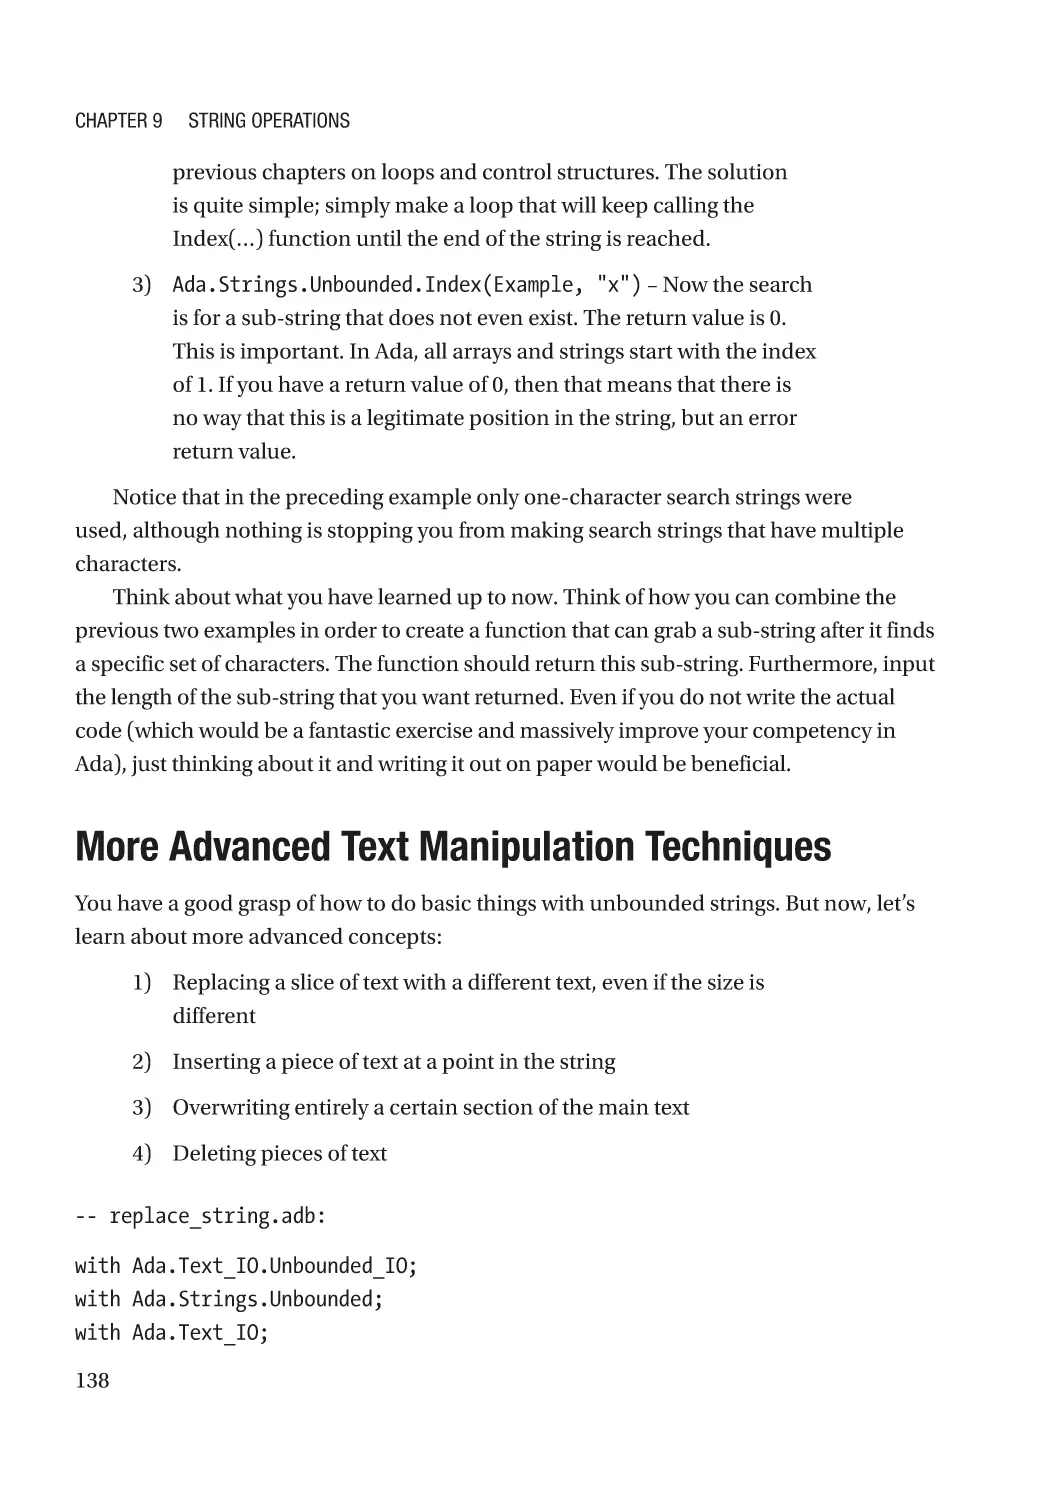 More Advanced Text Manipulation Techniques